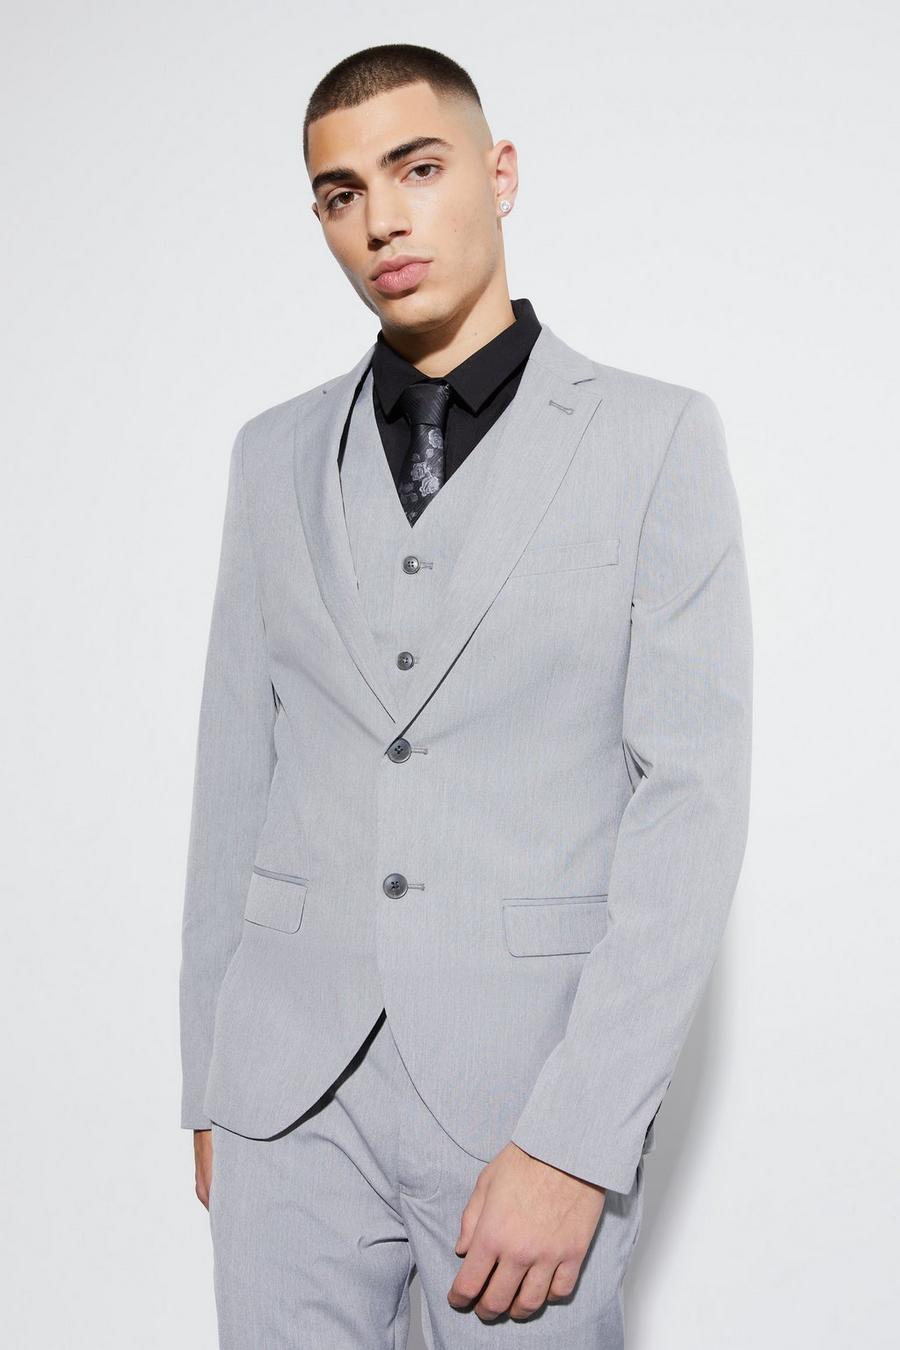 Grey Super Skinny Single Breasted Suit Jacket